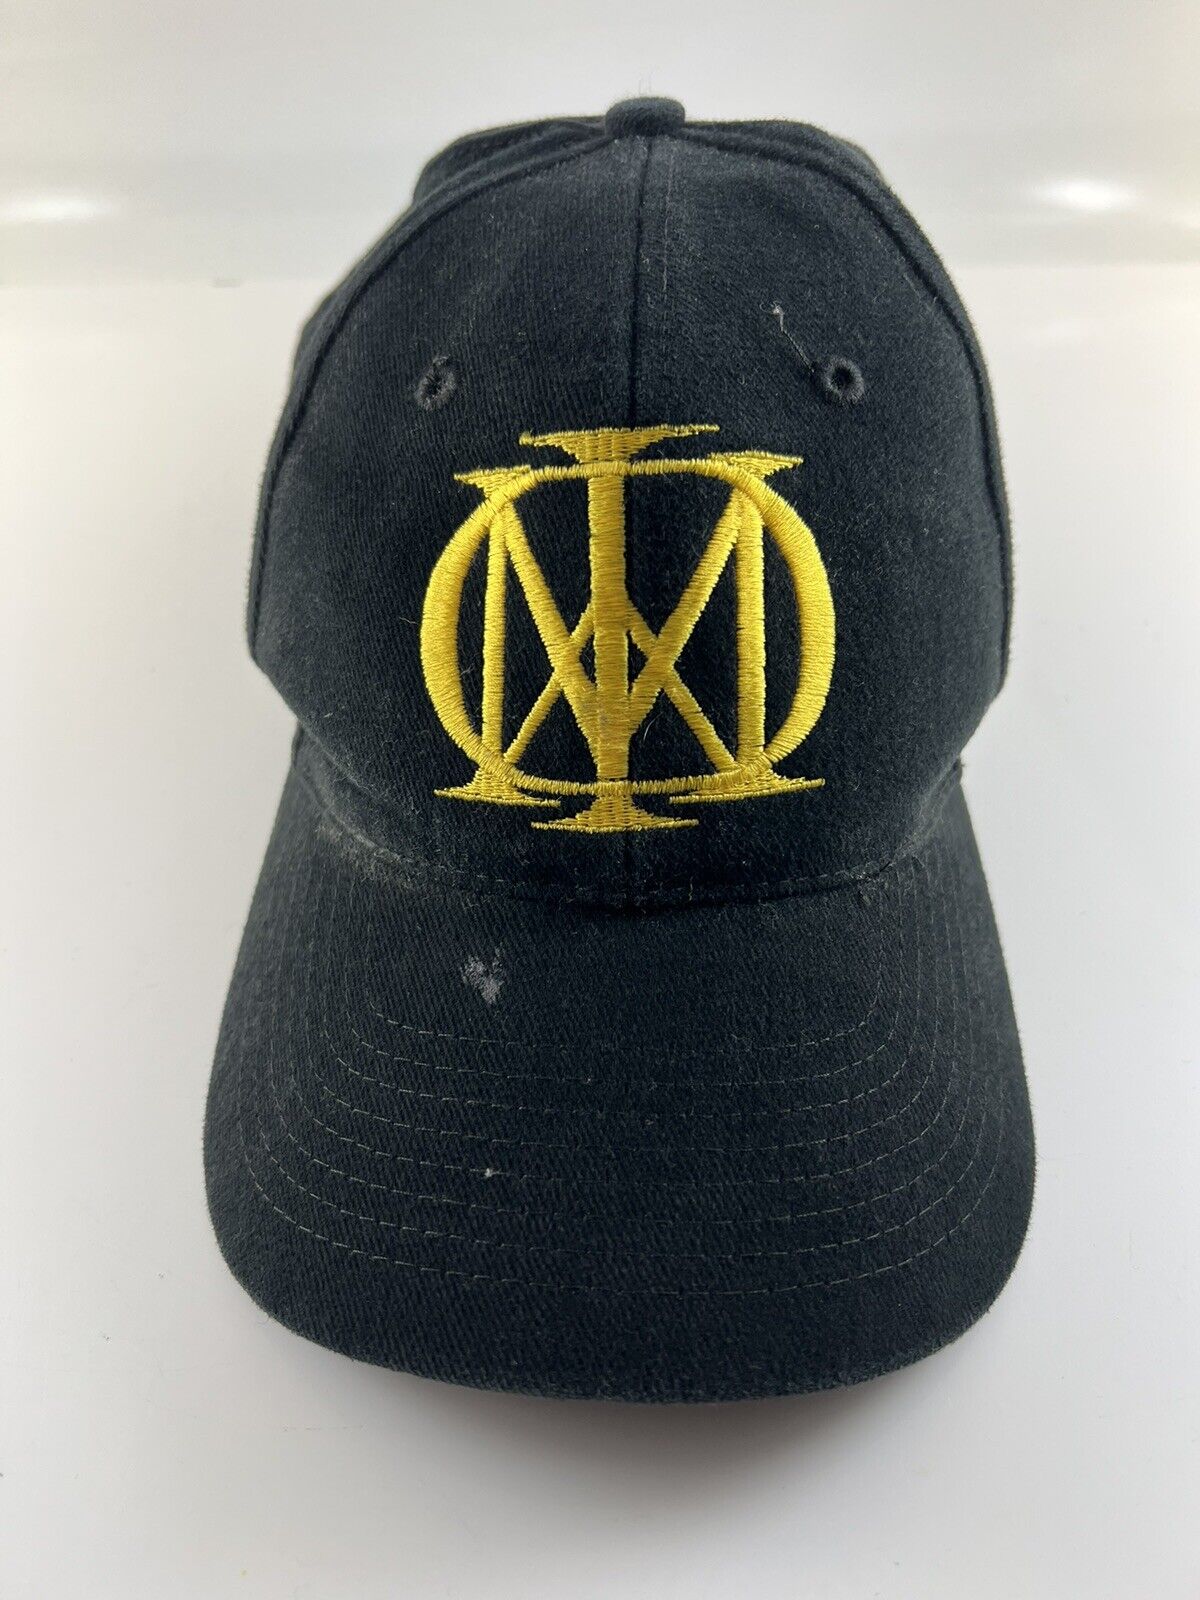 Dream Theater Metropolis 2000 Vintage Tour Snap-Back Cap, Black-Yellow Logo